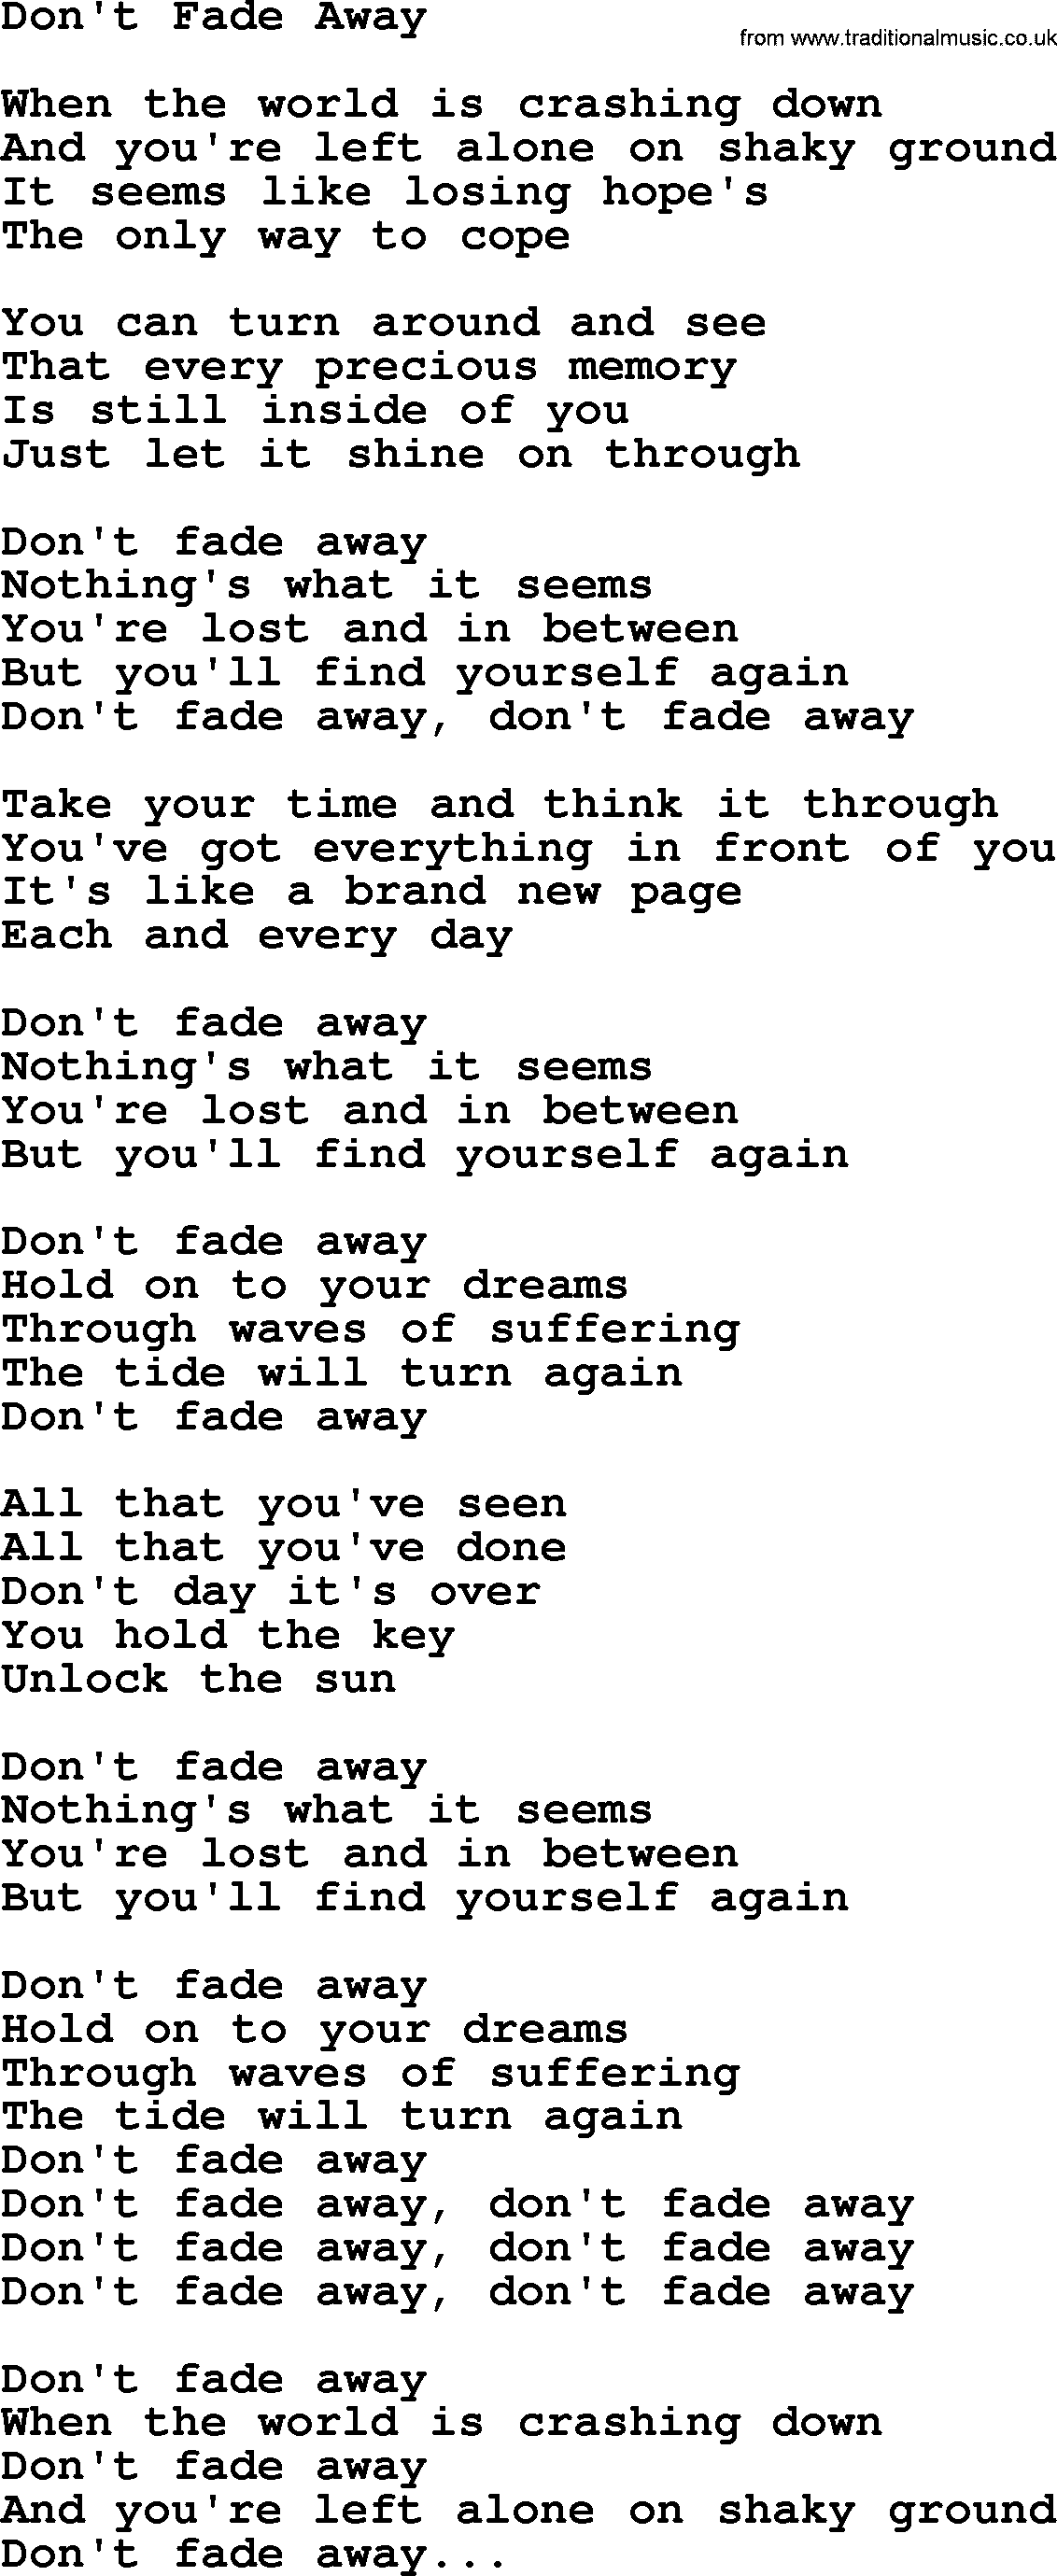 Willie Nelson song: Don't Fade Away lyrics